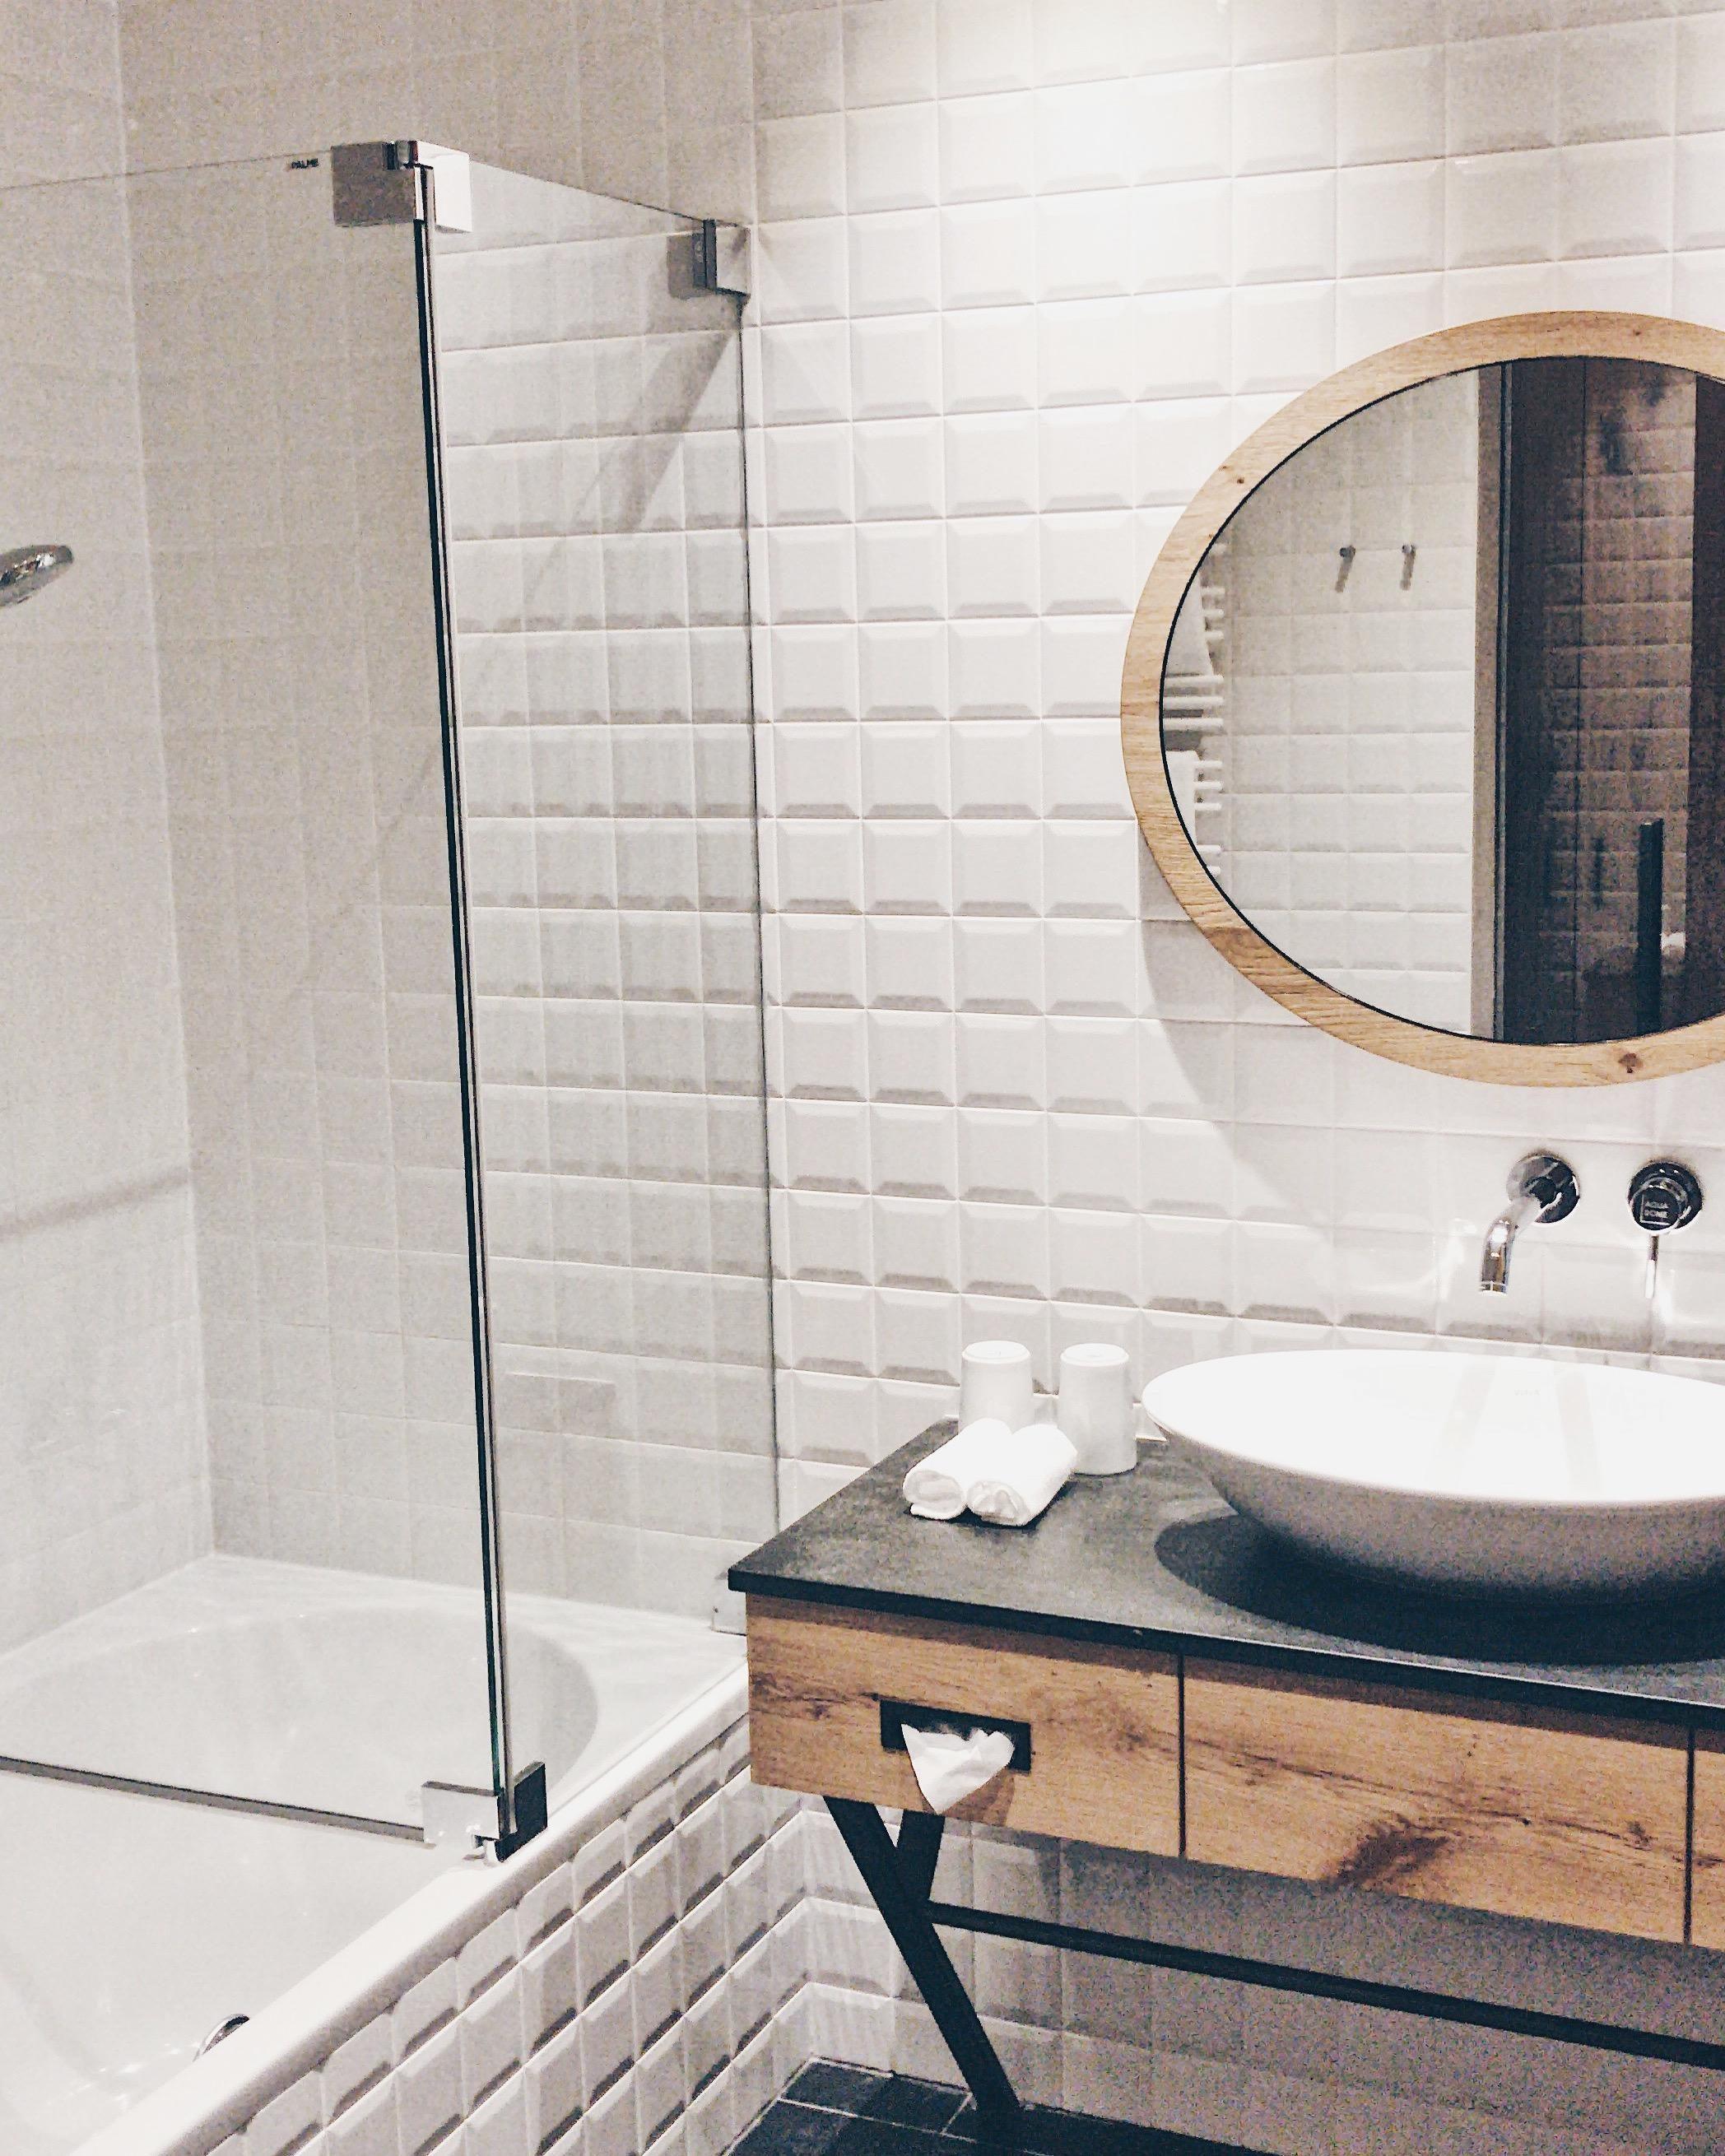 Bathroom.
#Hotel #Interior #Inspiration